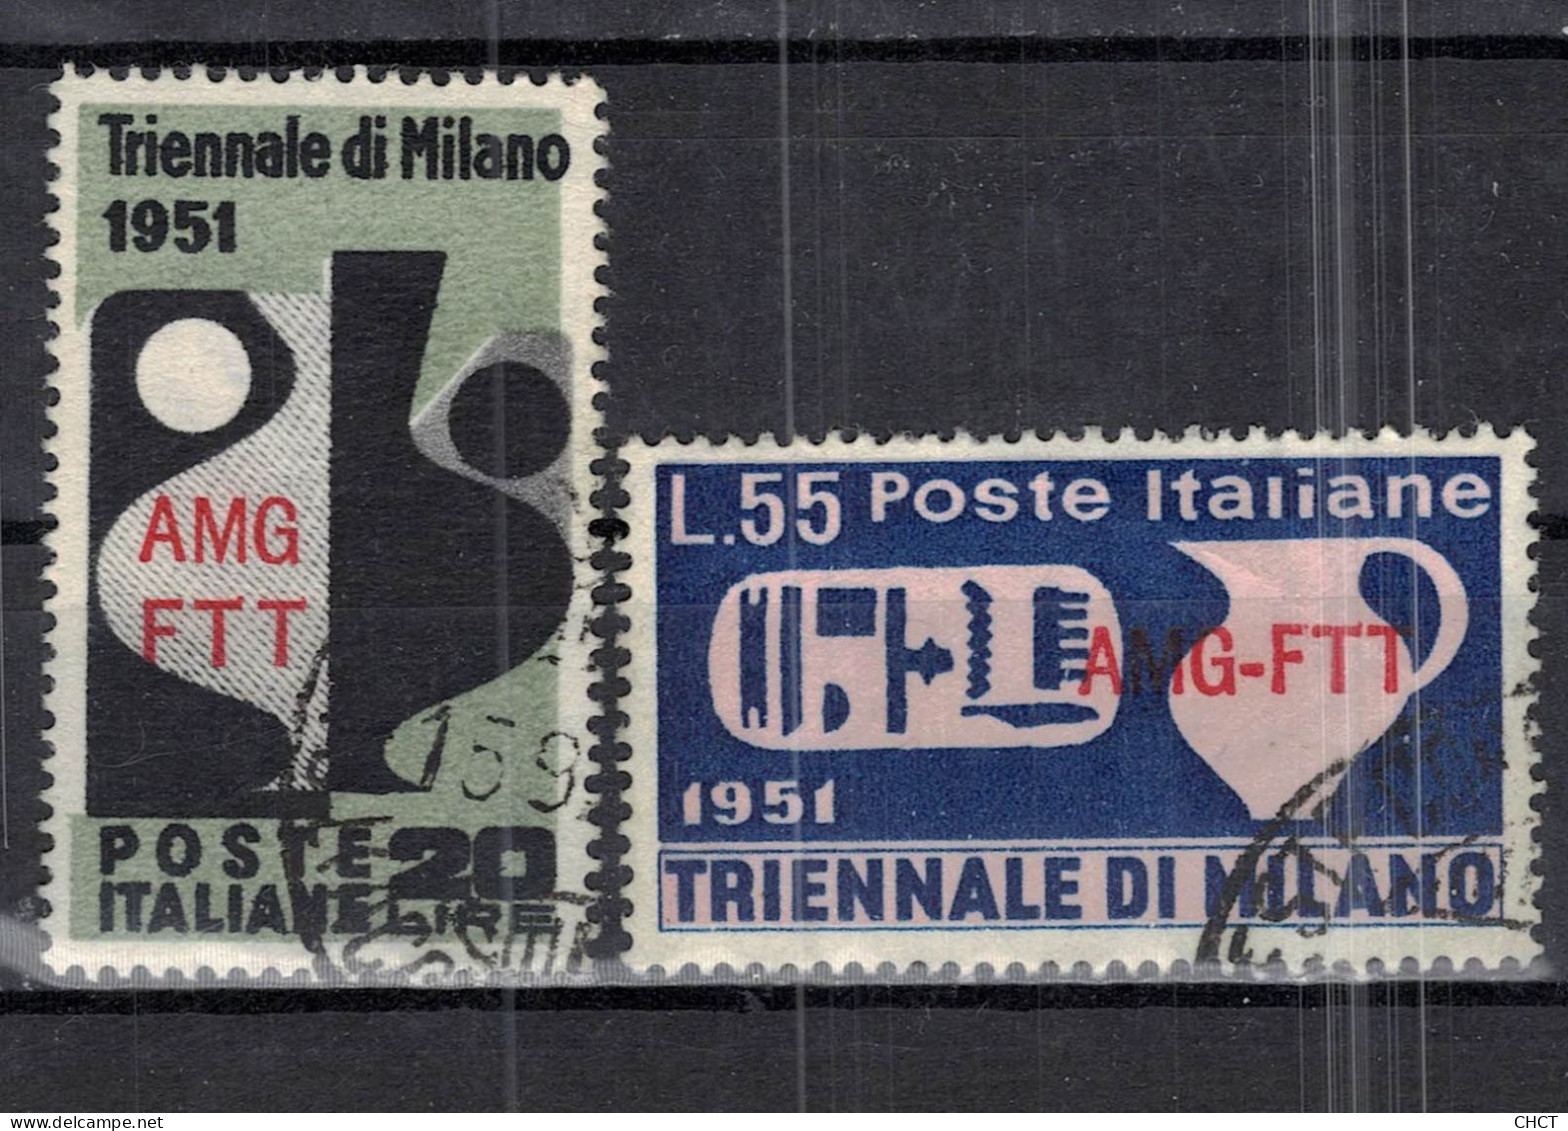 CHCT74 - Milan Triannual, Triennale Di Milano, AMG-FTT Overprint, Trieste A, 1951, Complete Series, Italy - Oblitérés